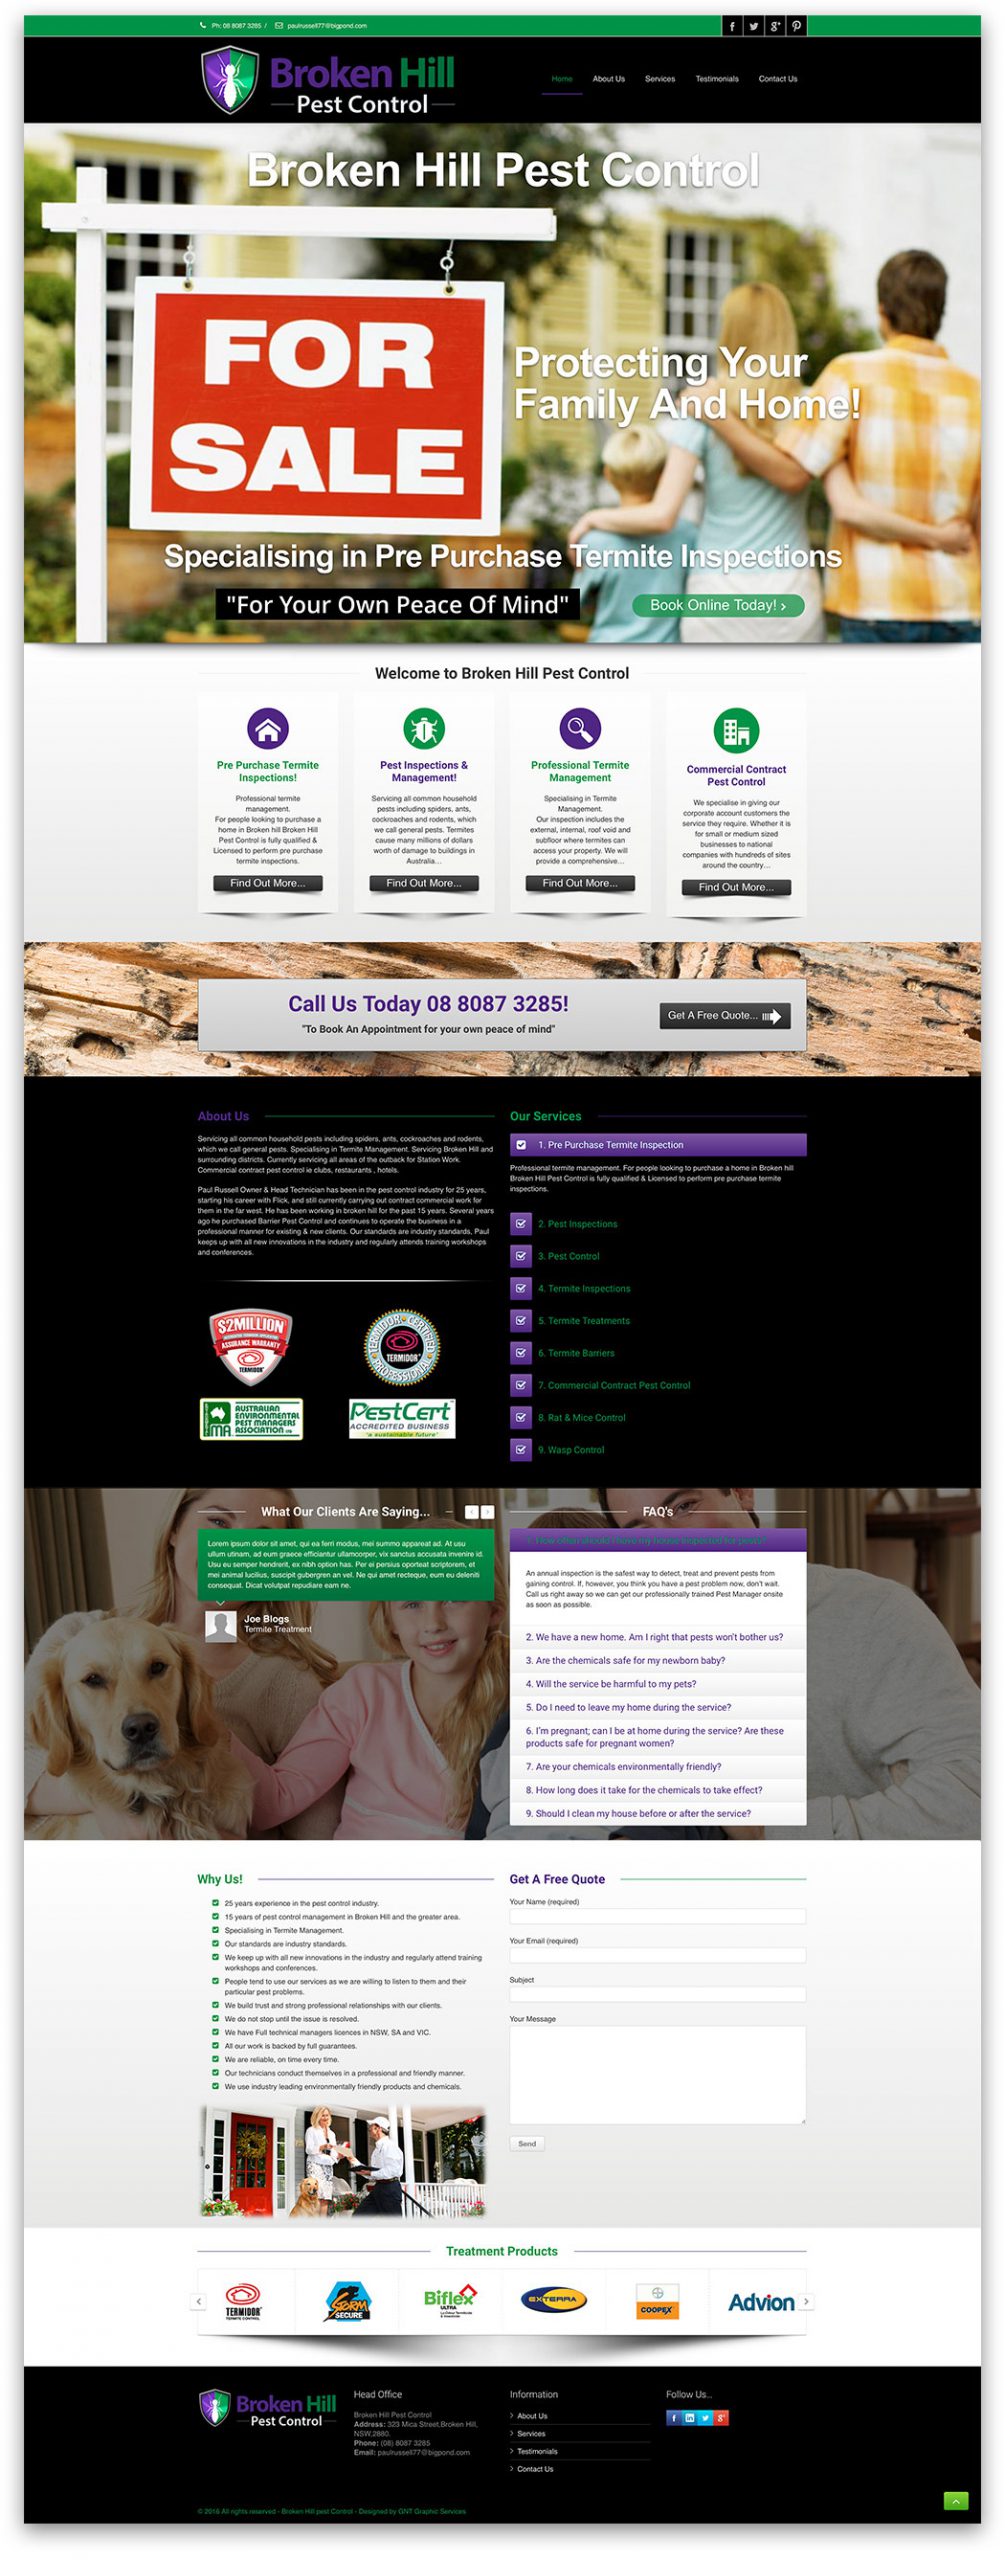 Broken Hill Pest Control Website deigned & built by GNT Graphic Services